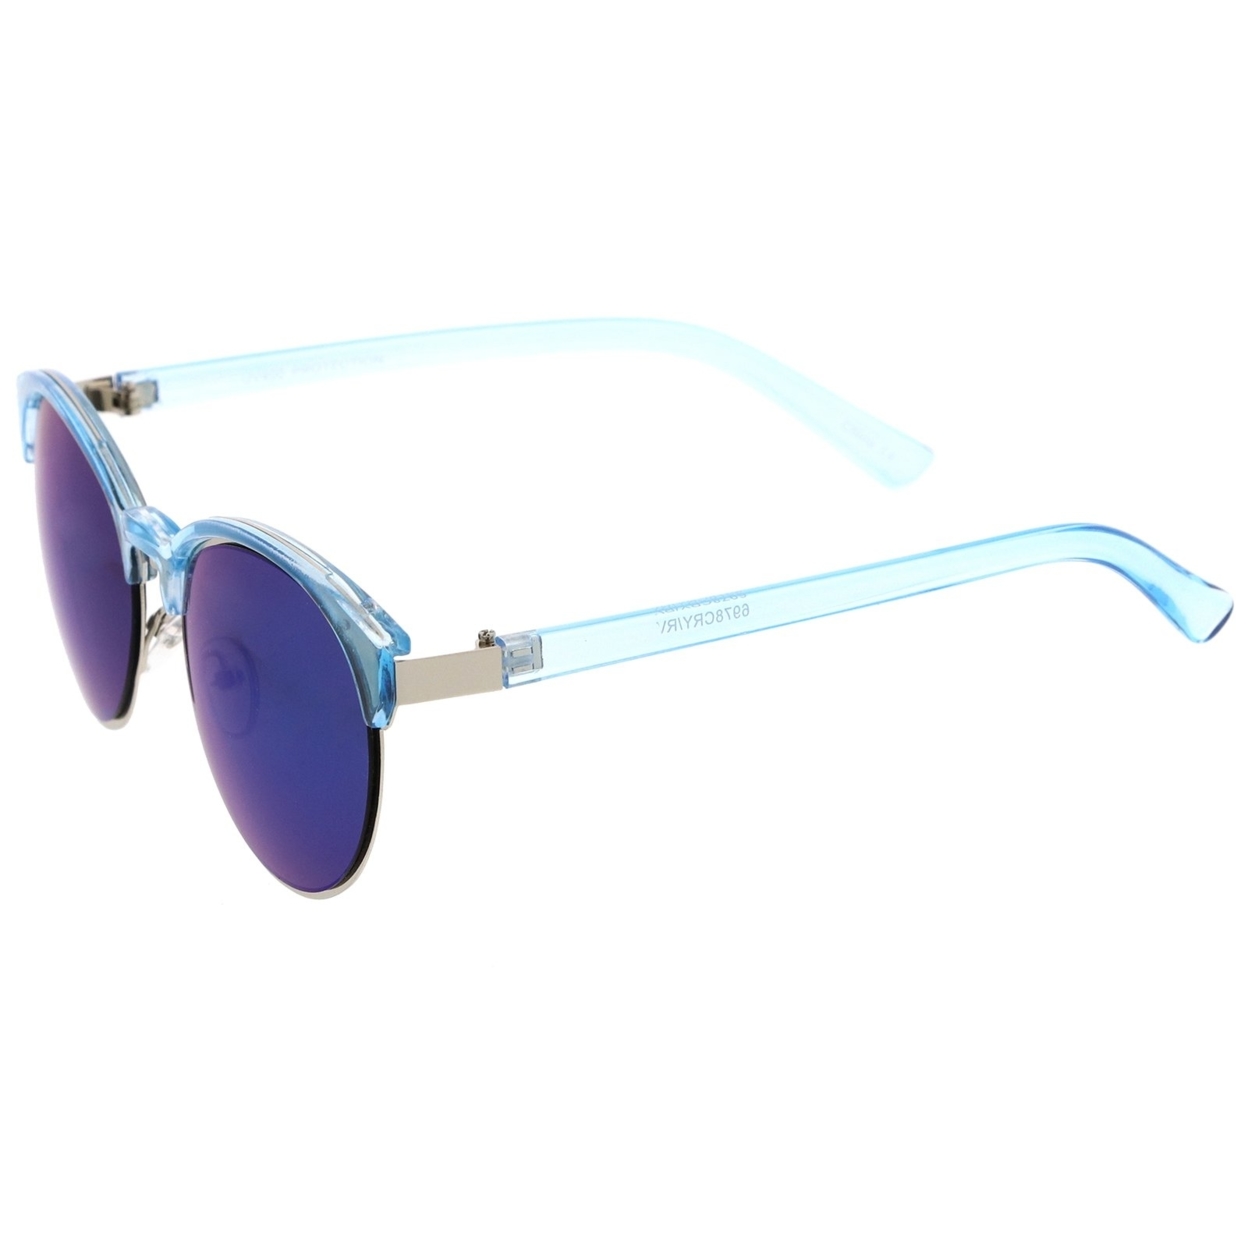 Double Nose Bridge Metal Trim Mirror Lens Round Cat Eye Sunglasses 55mm - Purple-Silver / Purple Mirror